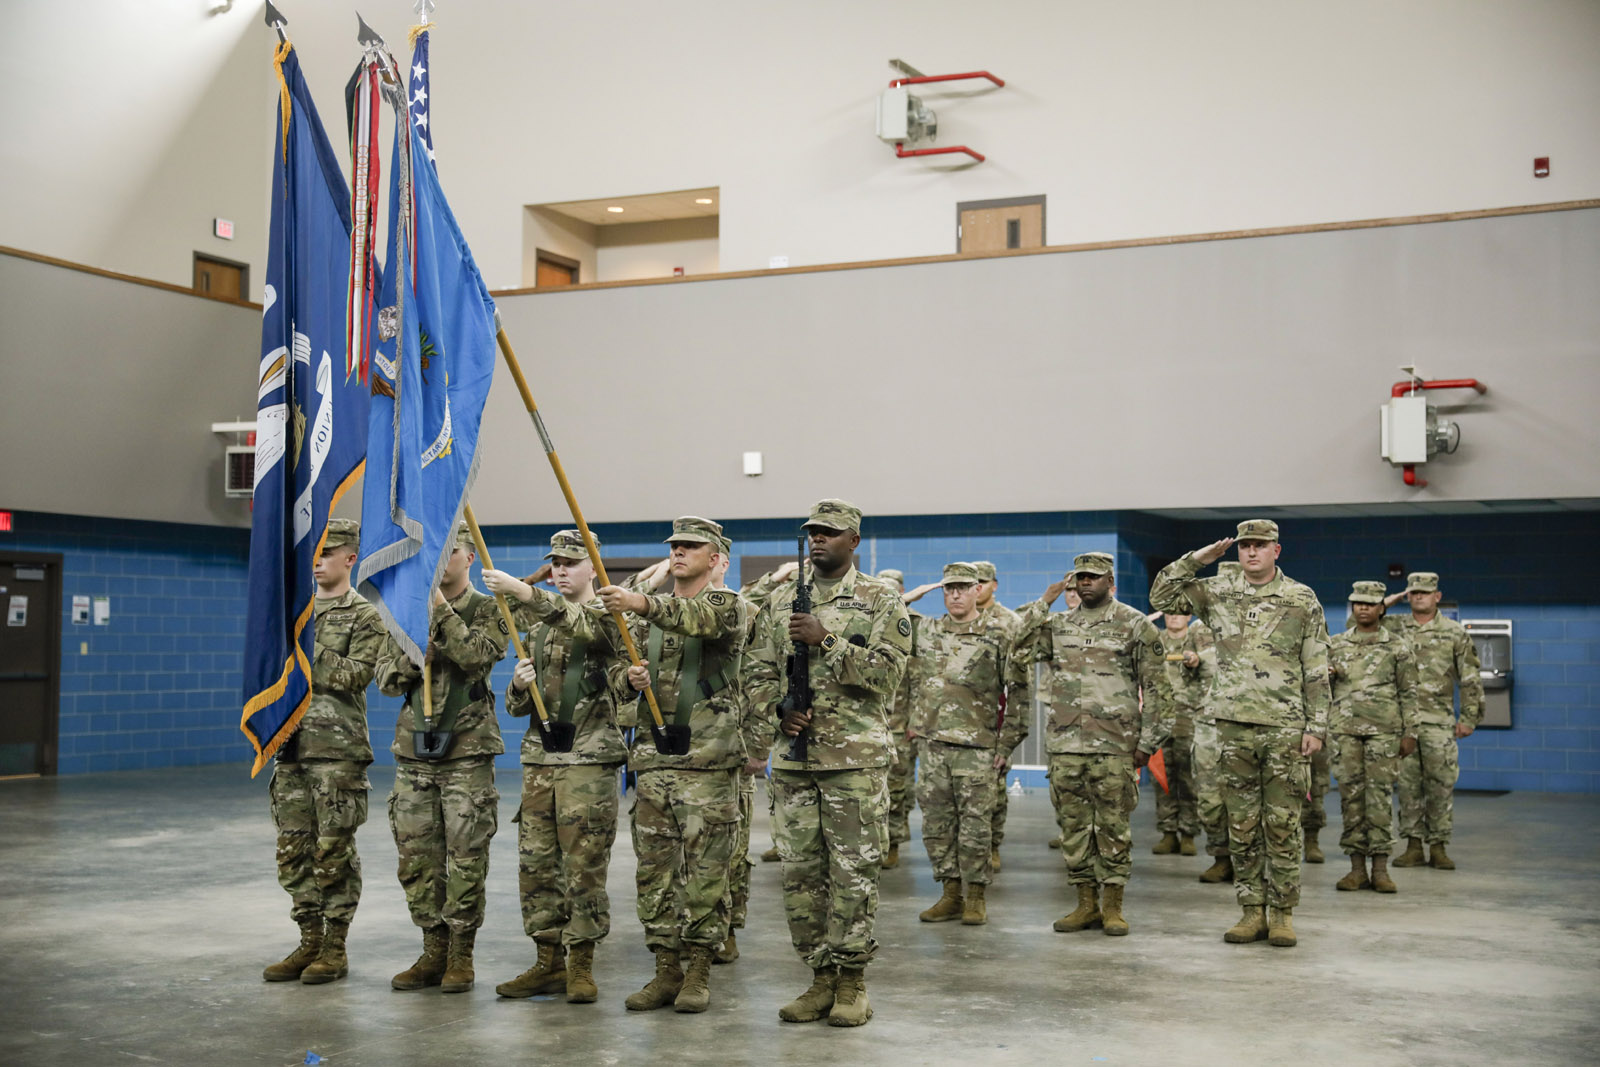 La. Guard intelligence battalion welcomes new commander and sergeant major